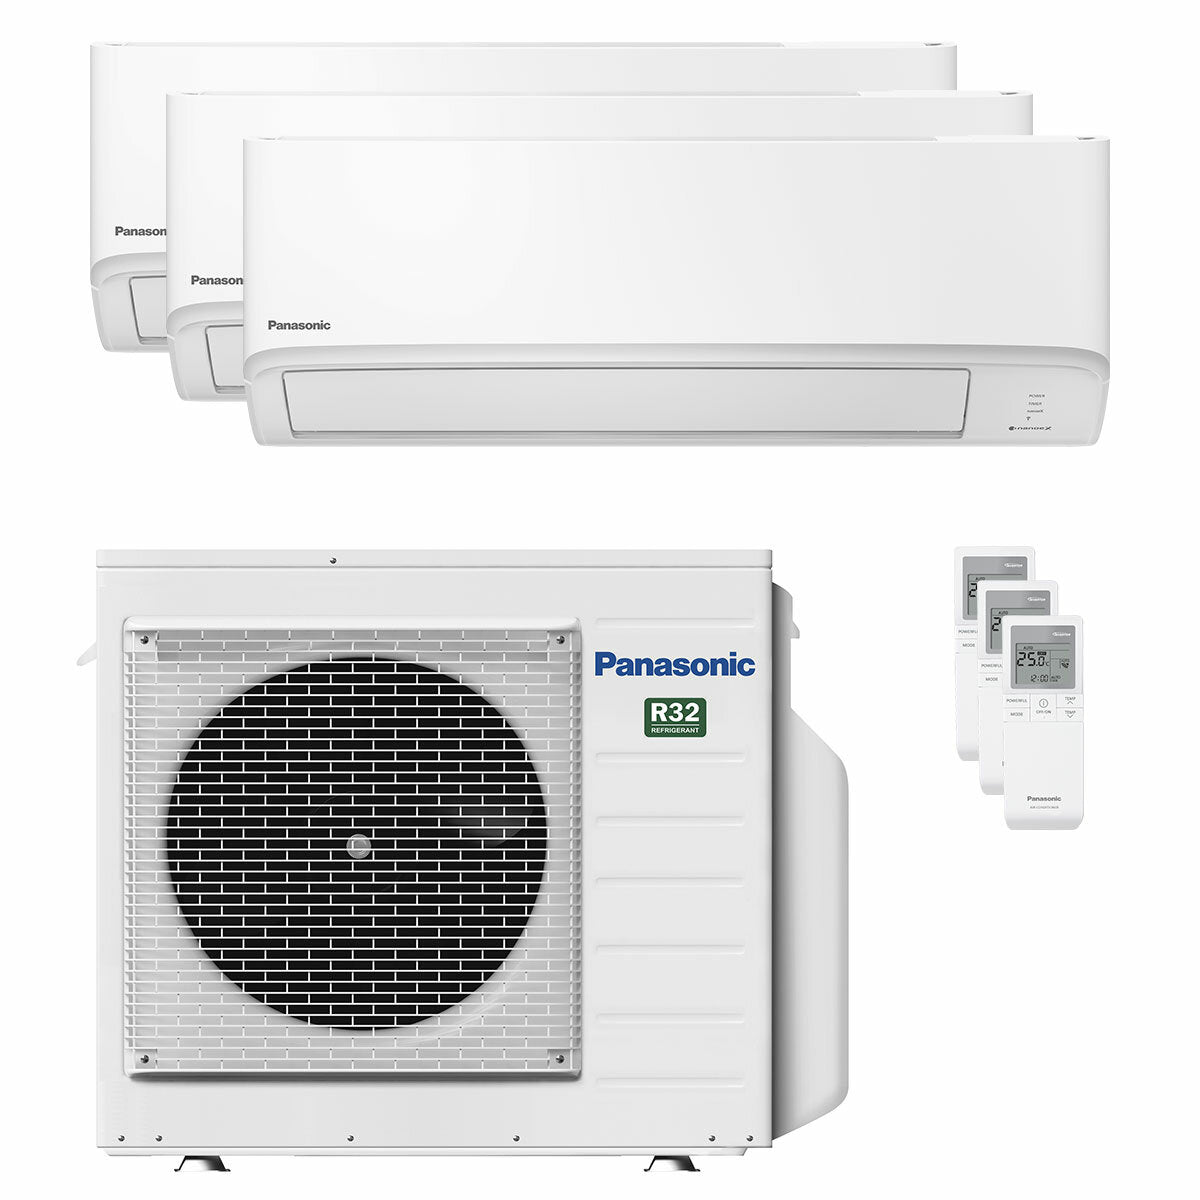 Panasonic TZ Series trial split air conditioner 7000+9000+18000 BTU A+++ wifi external unit 5.2 kW